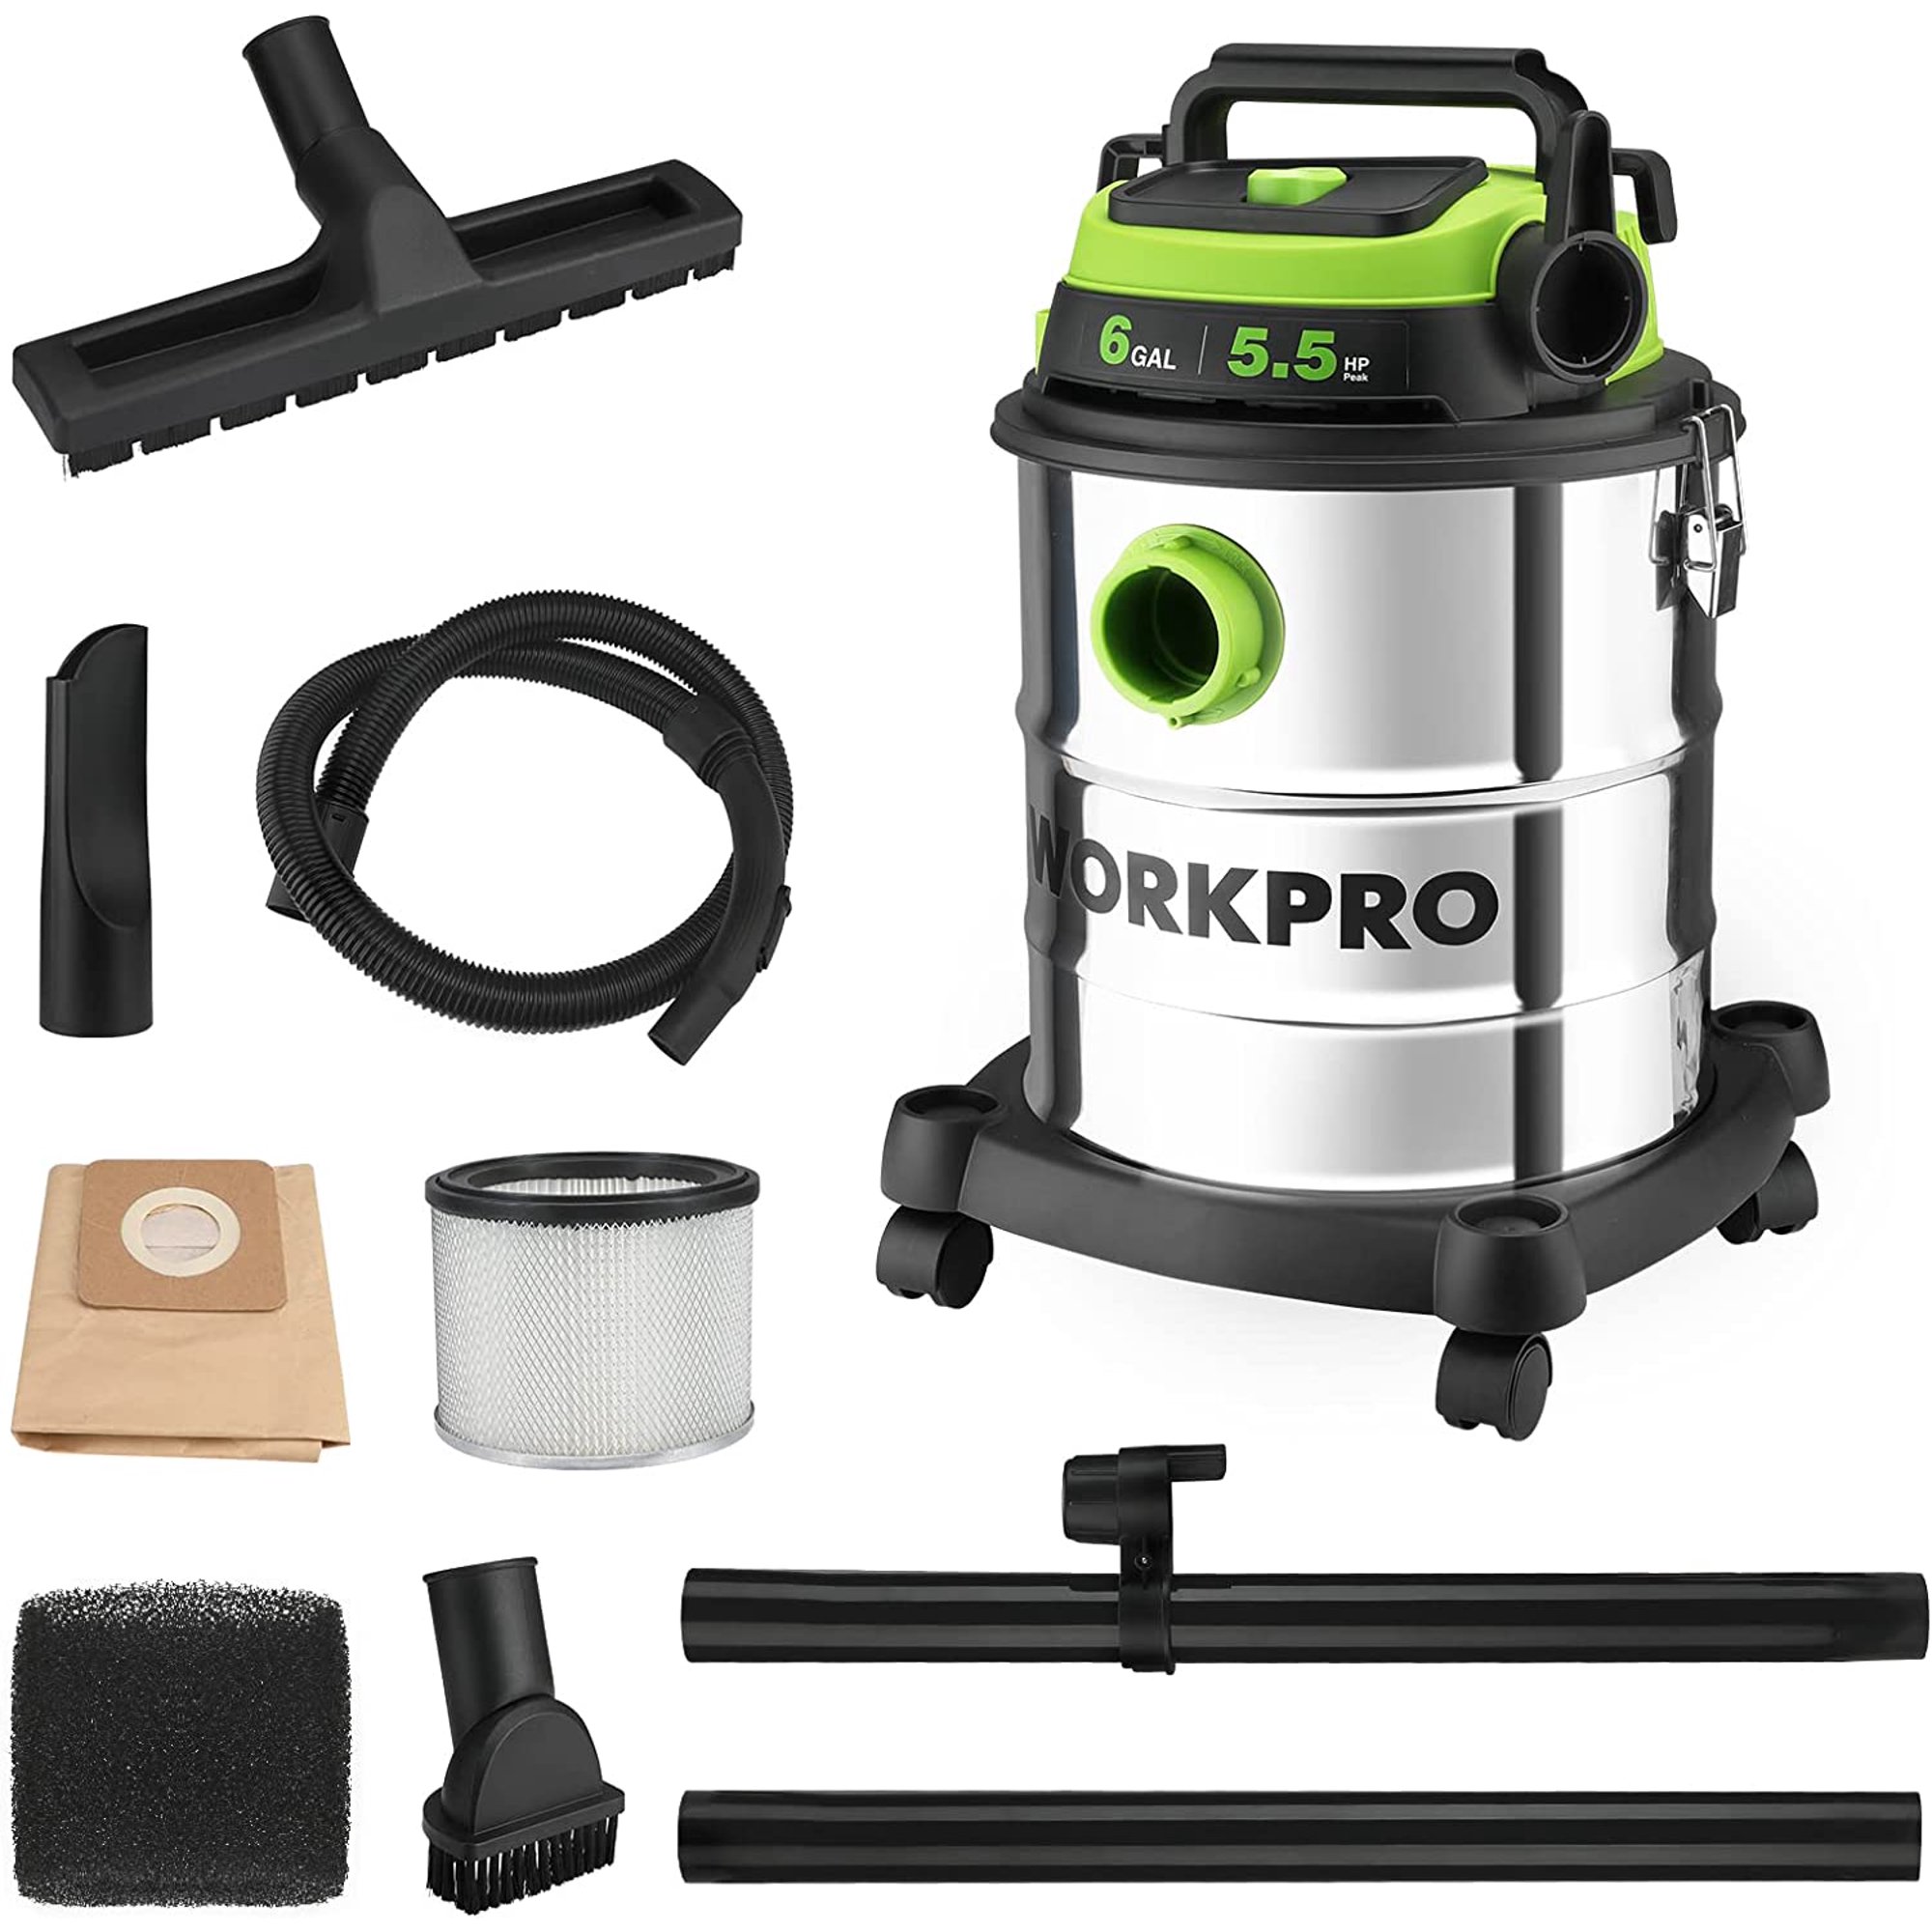 WORKPRO 6 Gallon Wet/Dry Shop Vacuum, 5.5 Peak HP Shop Vac Cleaner with HEPA Filter